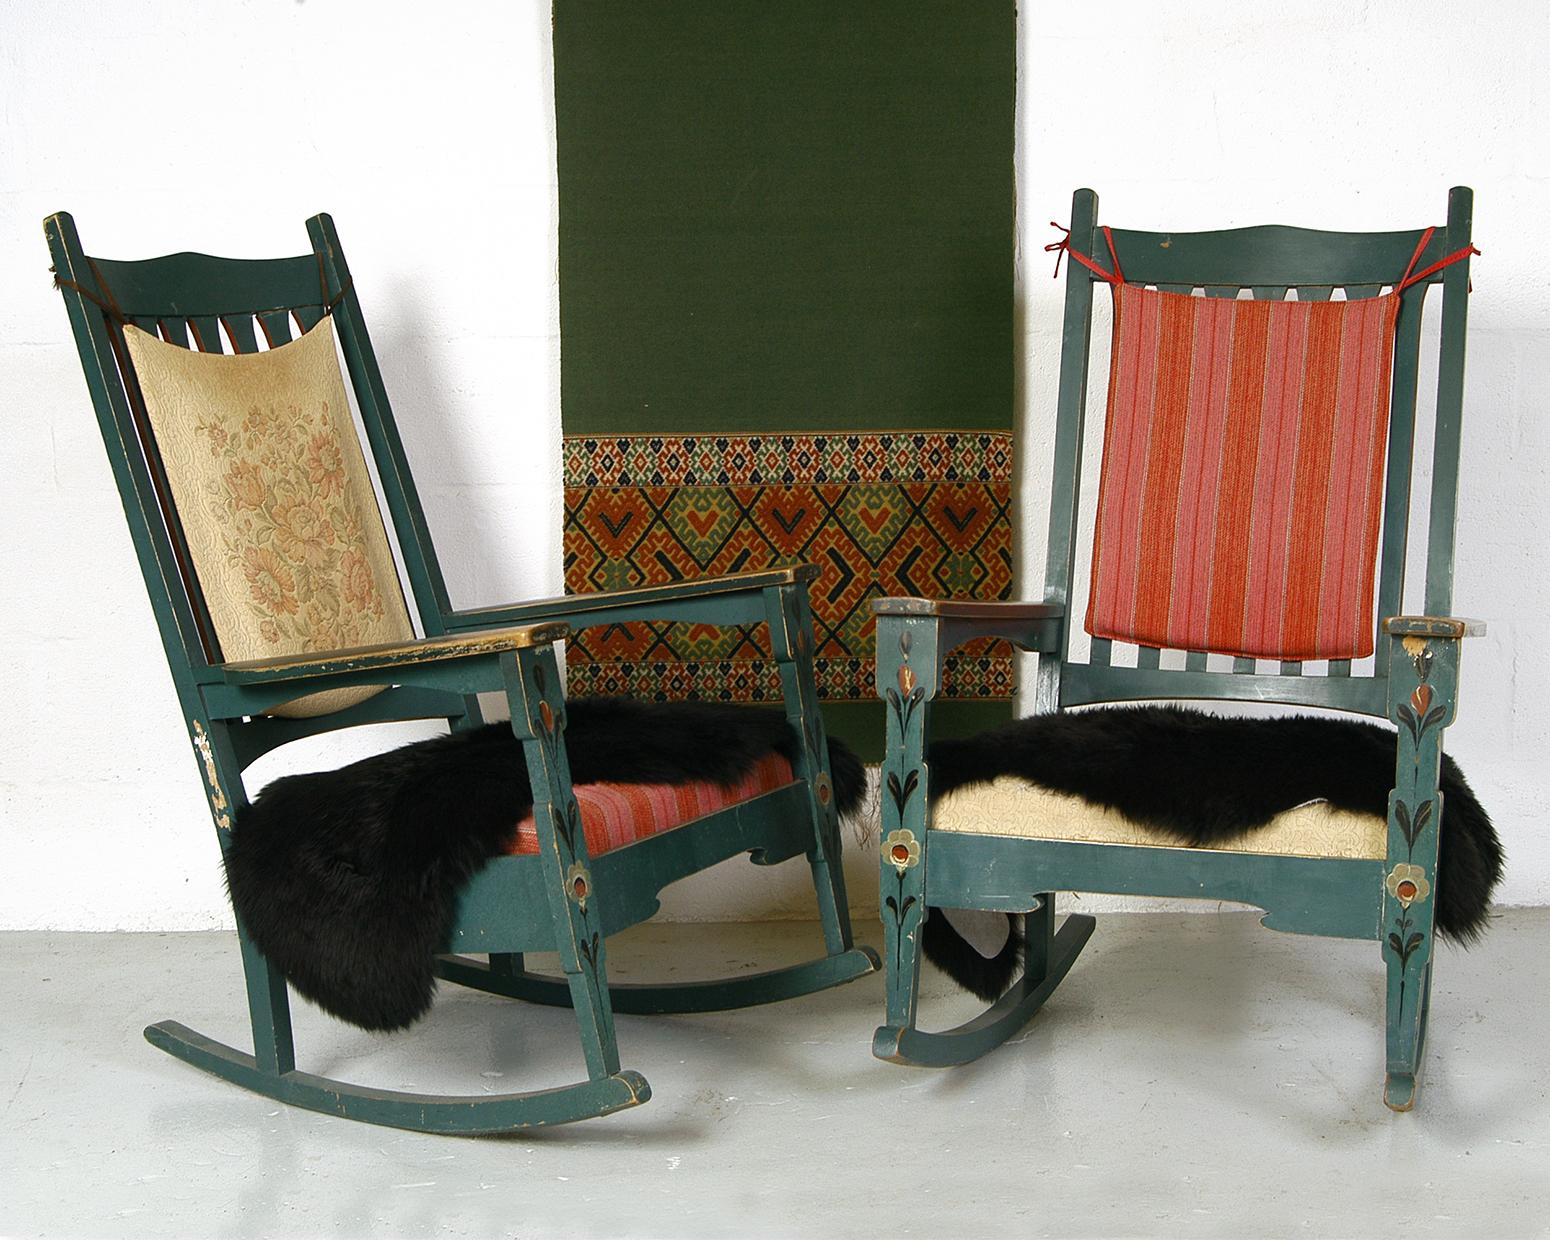 Beech 20th Century Swedish Dalarna Folk Art Painted Scandinavian Rocking Chairs, Pair